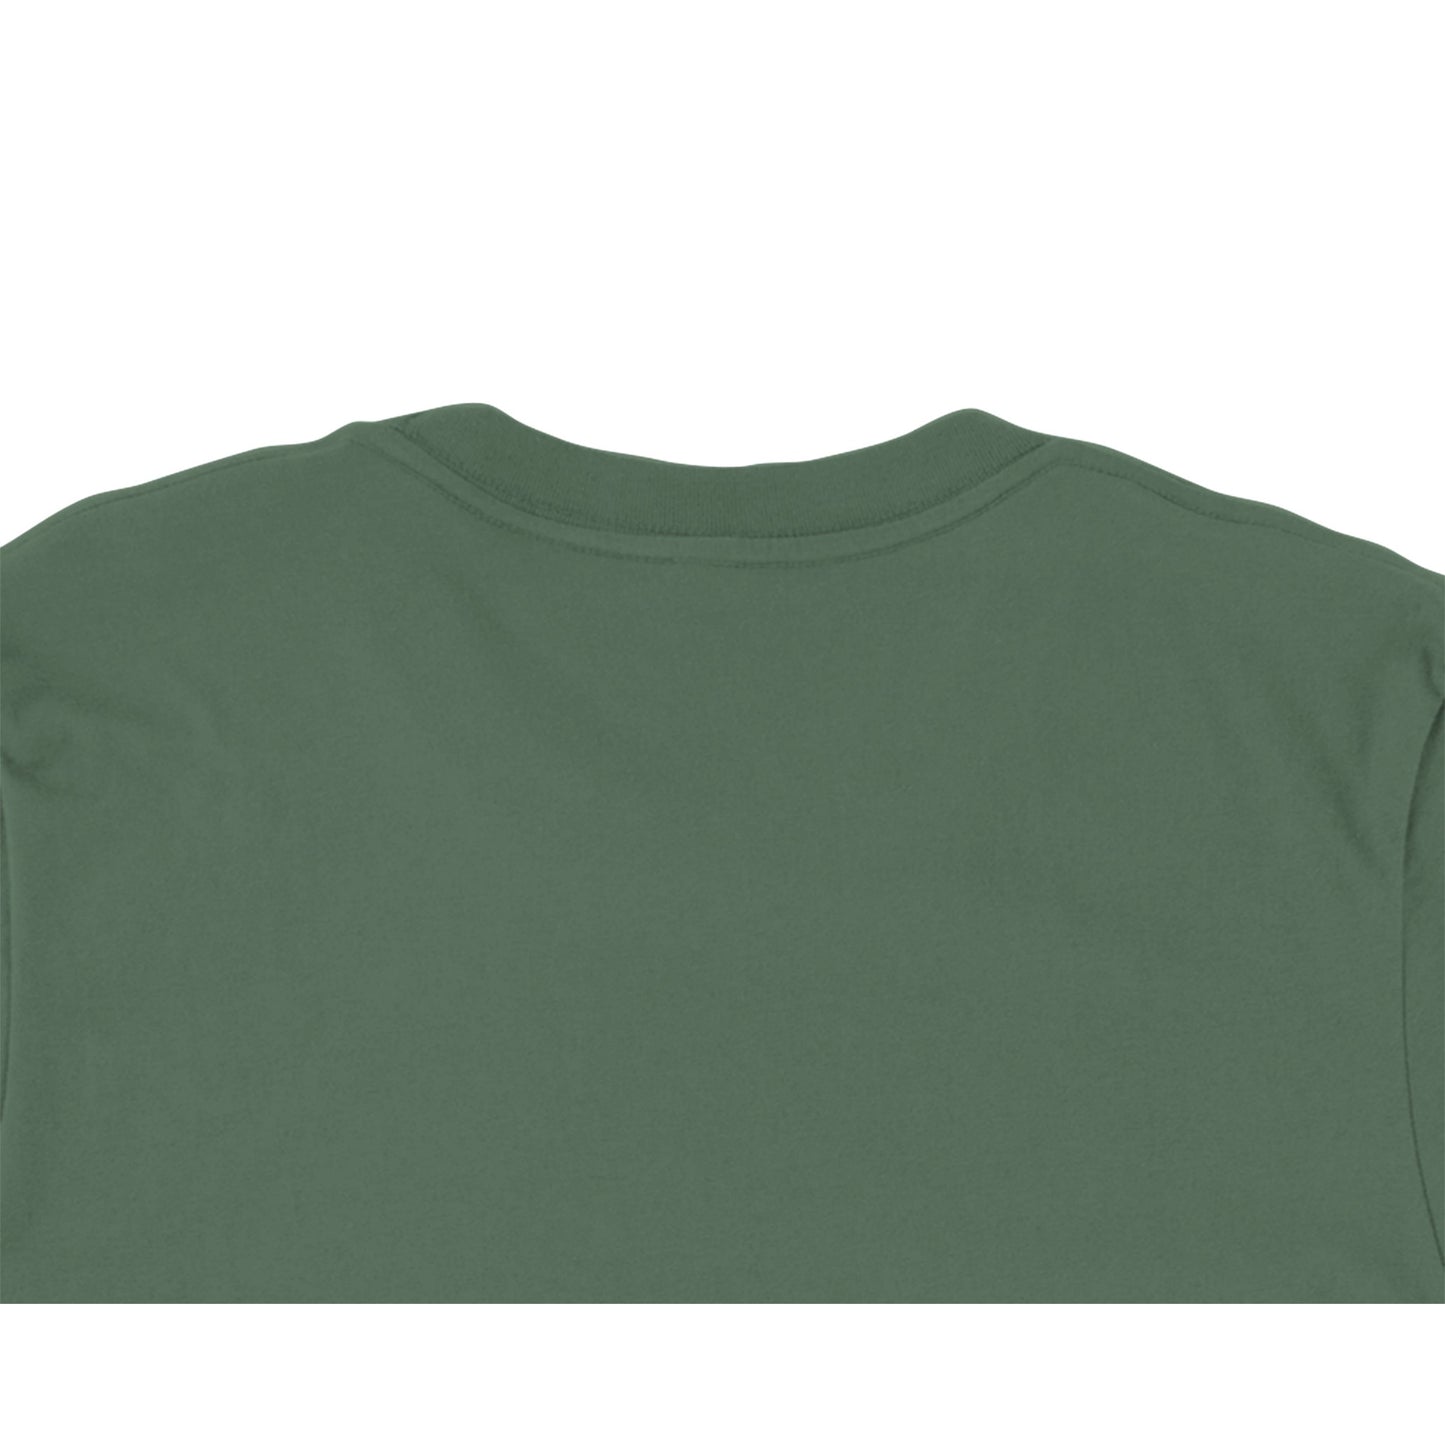 Budget Unisex Crewneck T-Shirt/Katze-Lustig